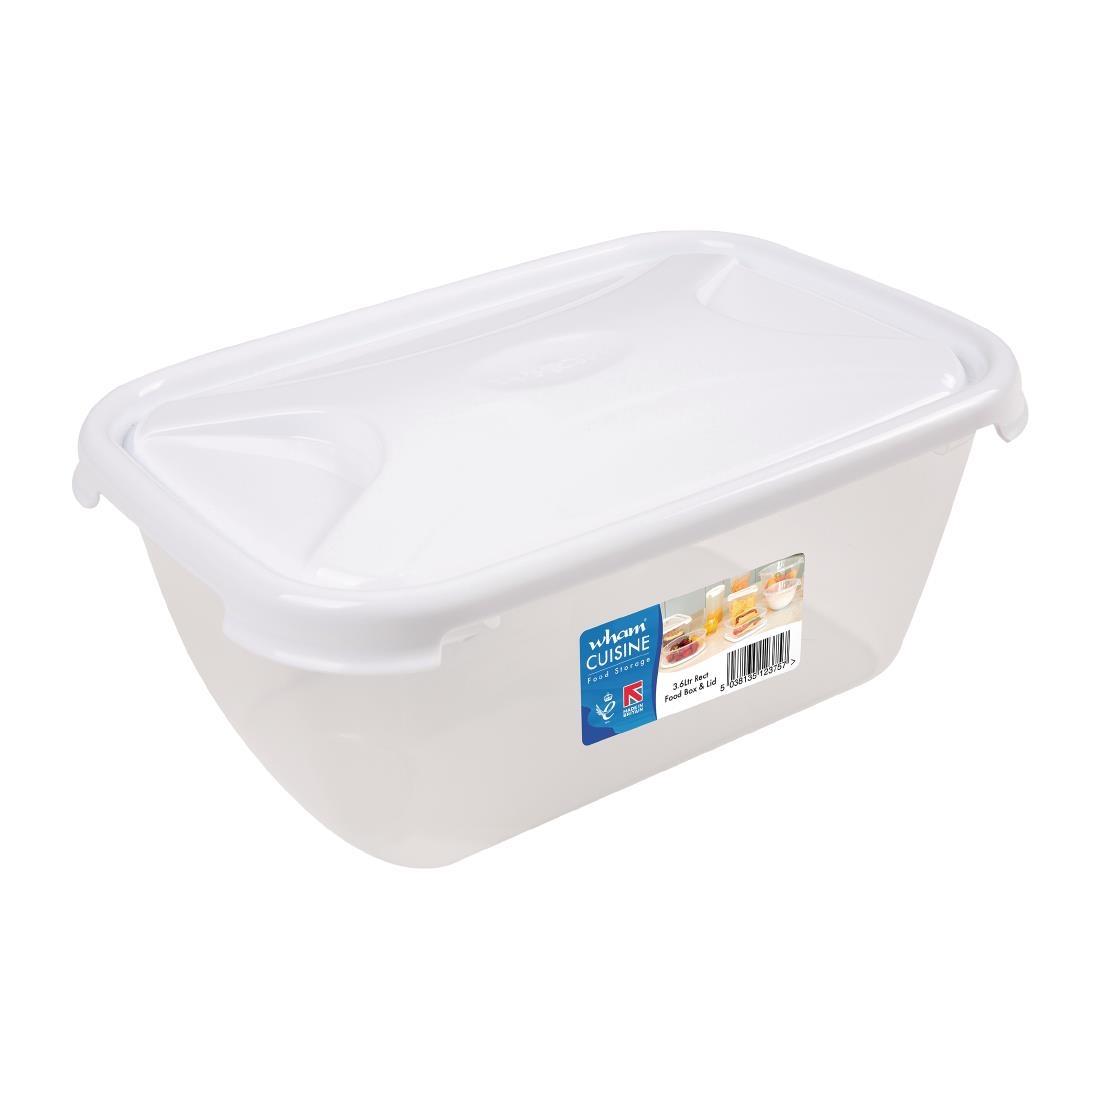 Wham Cuisine Polypropylene Rectangular Food Storage Box Container 3.6ltr - FS454  - 1